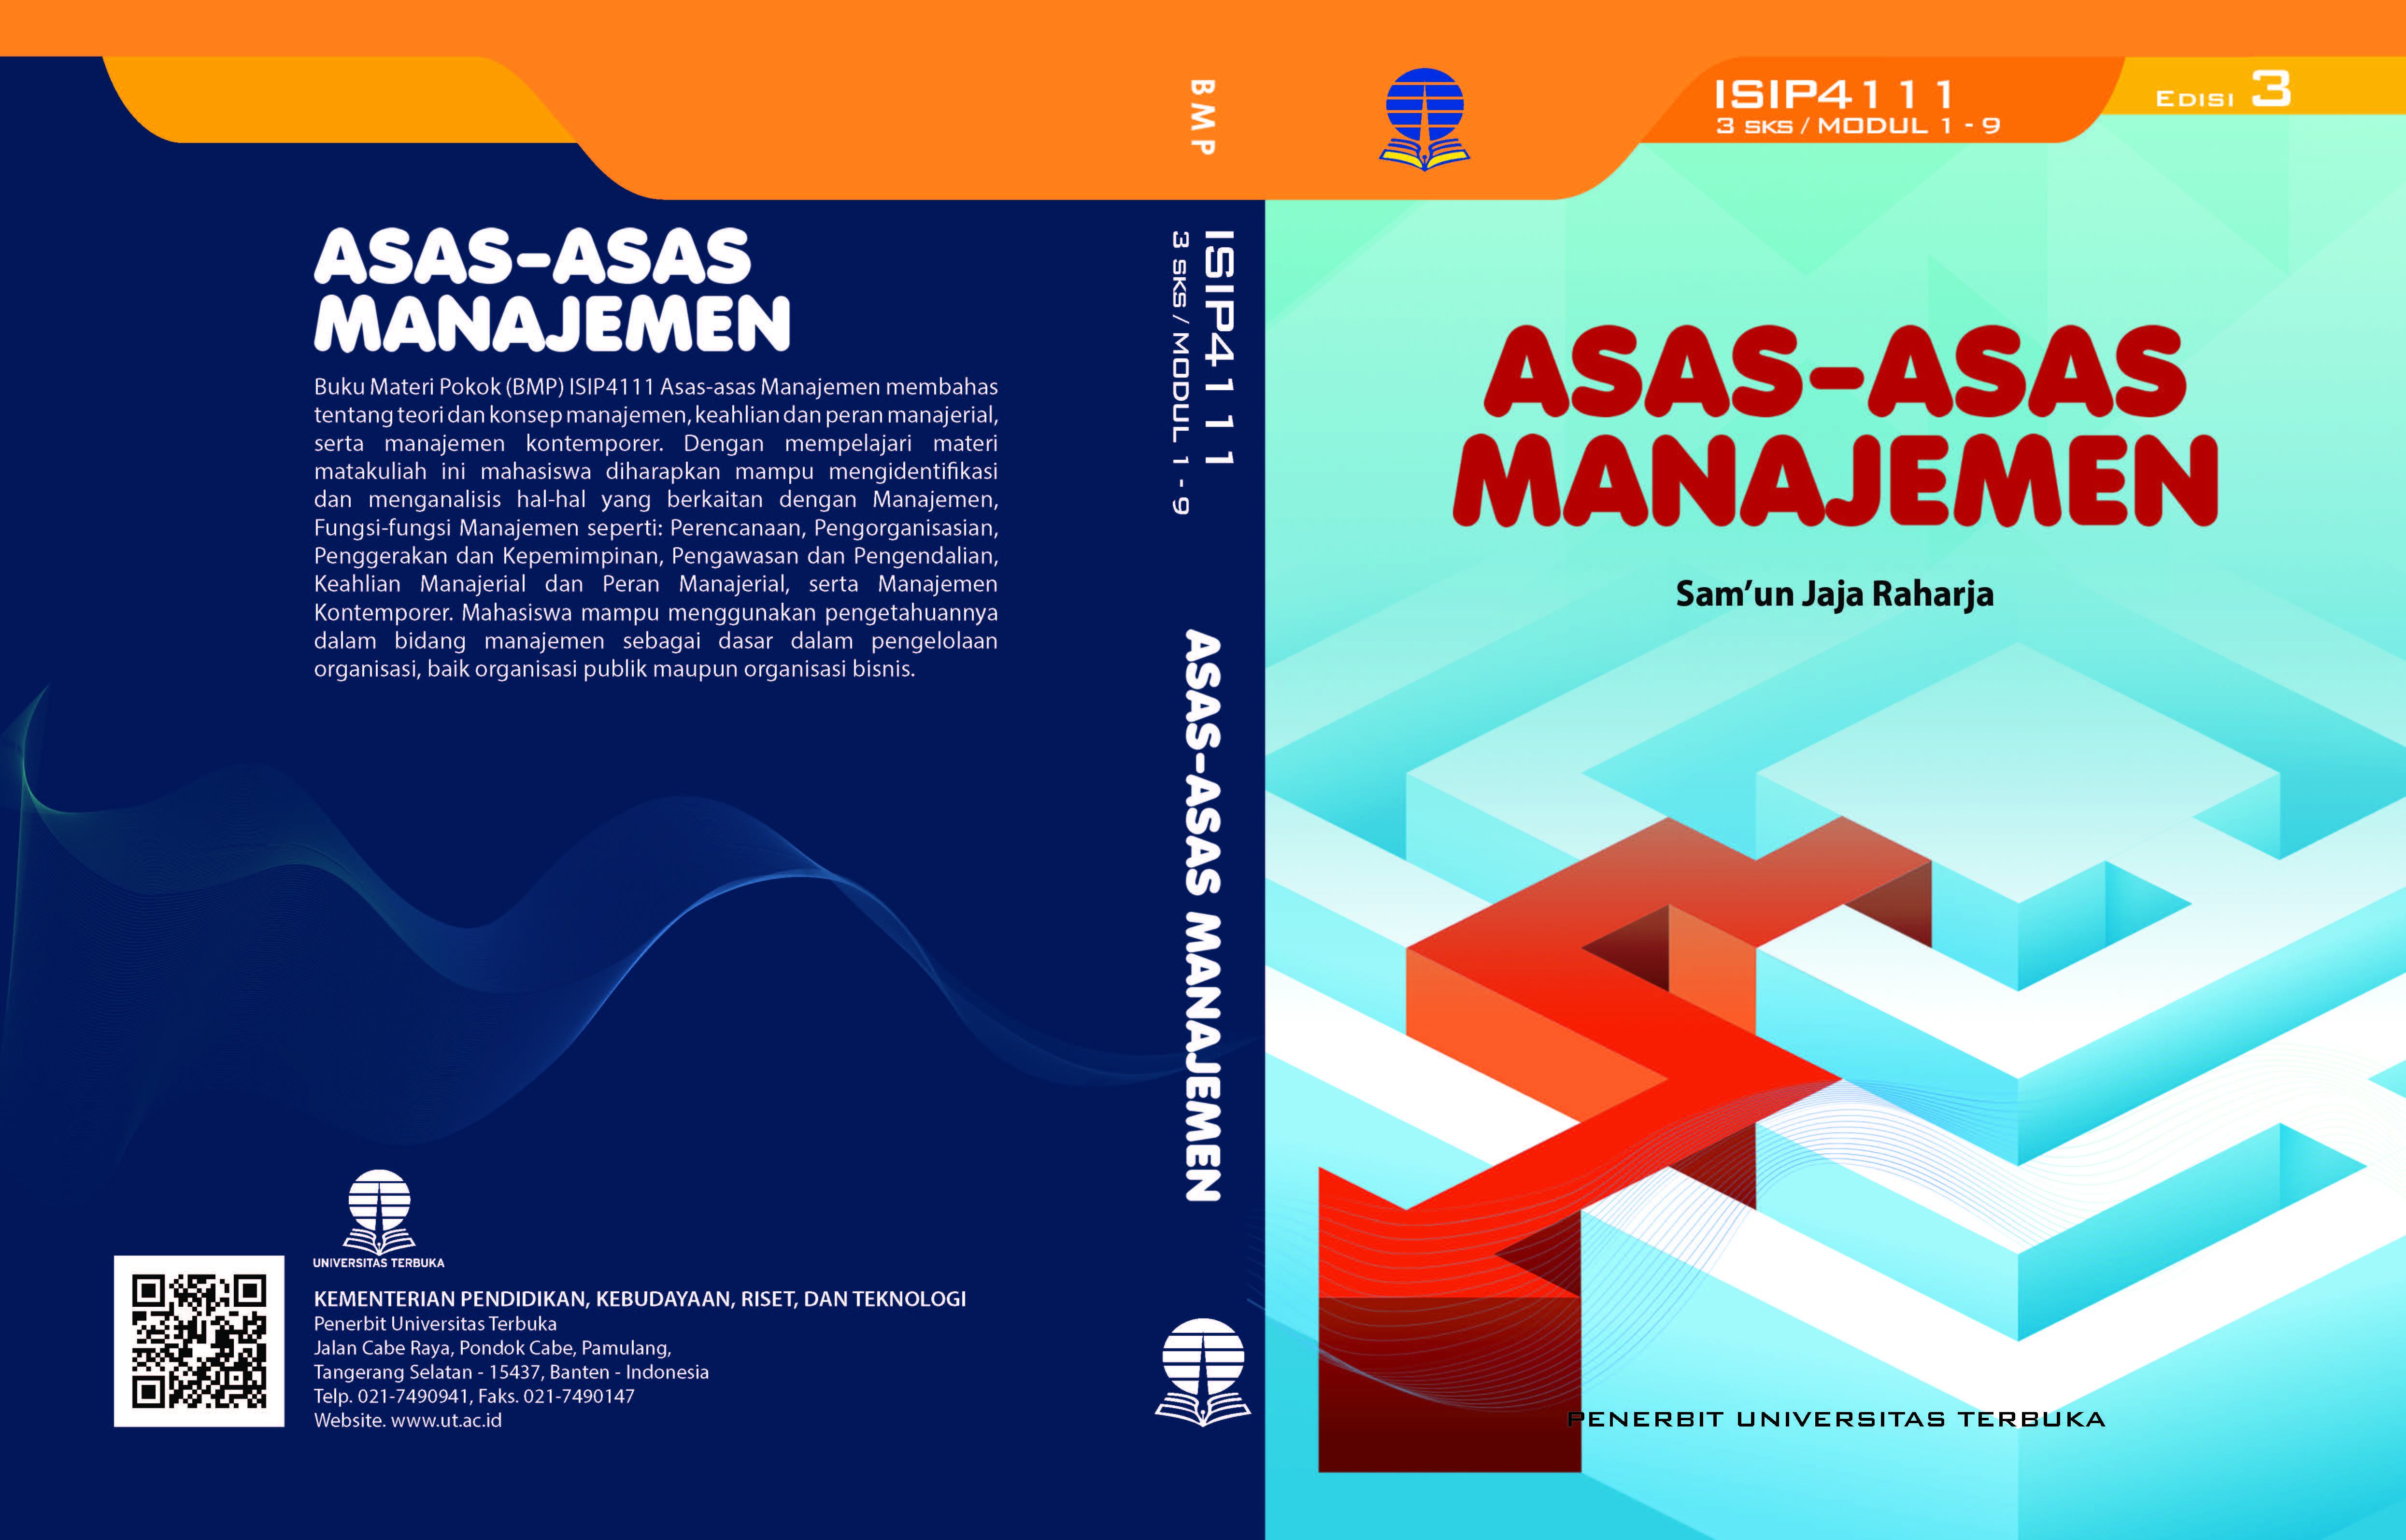 Asas-asas Manajemen ISIP4111